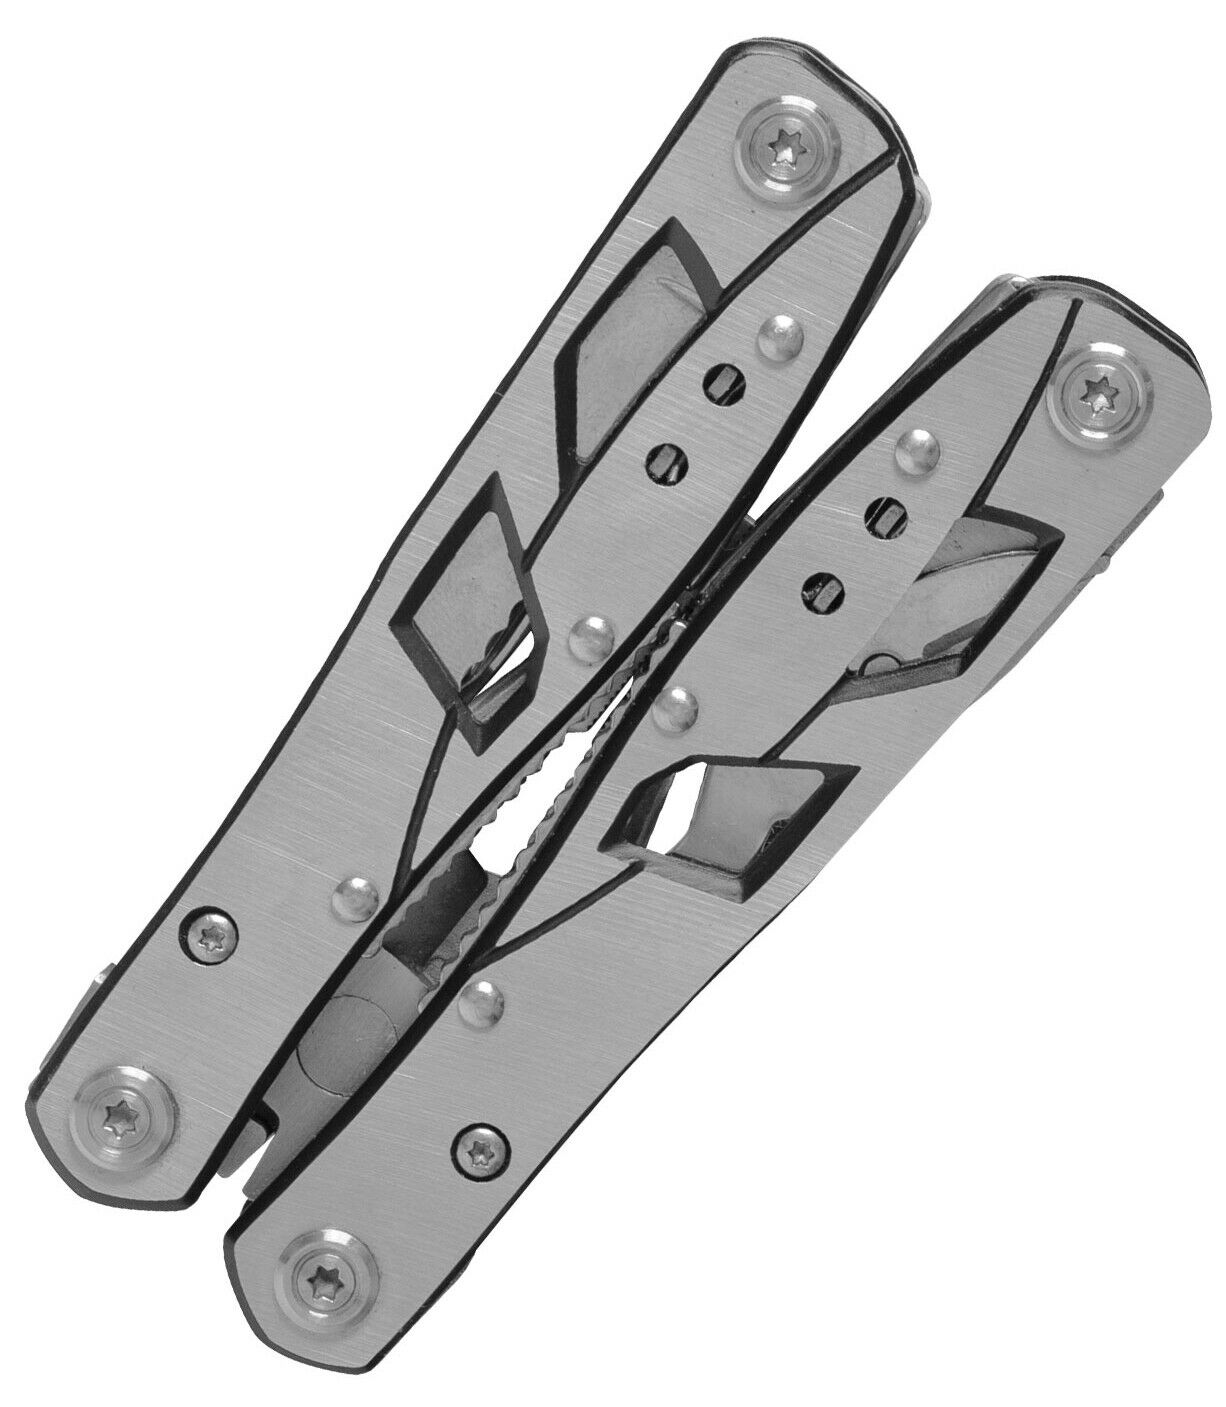 Rothco Stainless Steel Multi Tool Knife Pliers Bottle Can Opener Scissors 5223